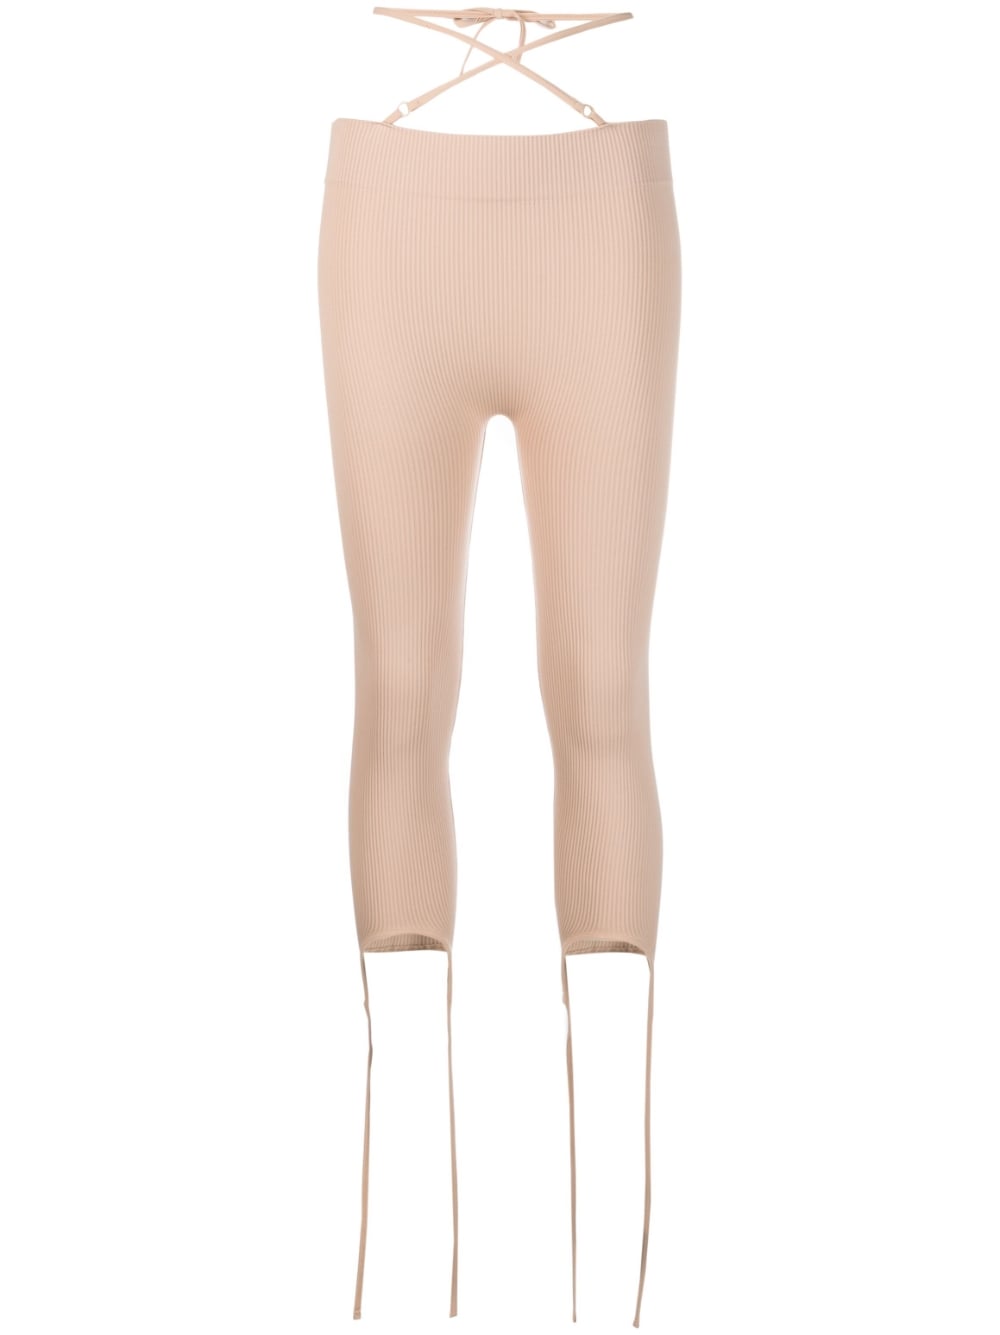 NIKE Women's Dri-FIT Printed Cropped Training Leggings Small Beige Peach  Floral | eBay